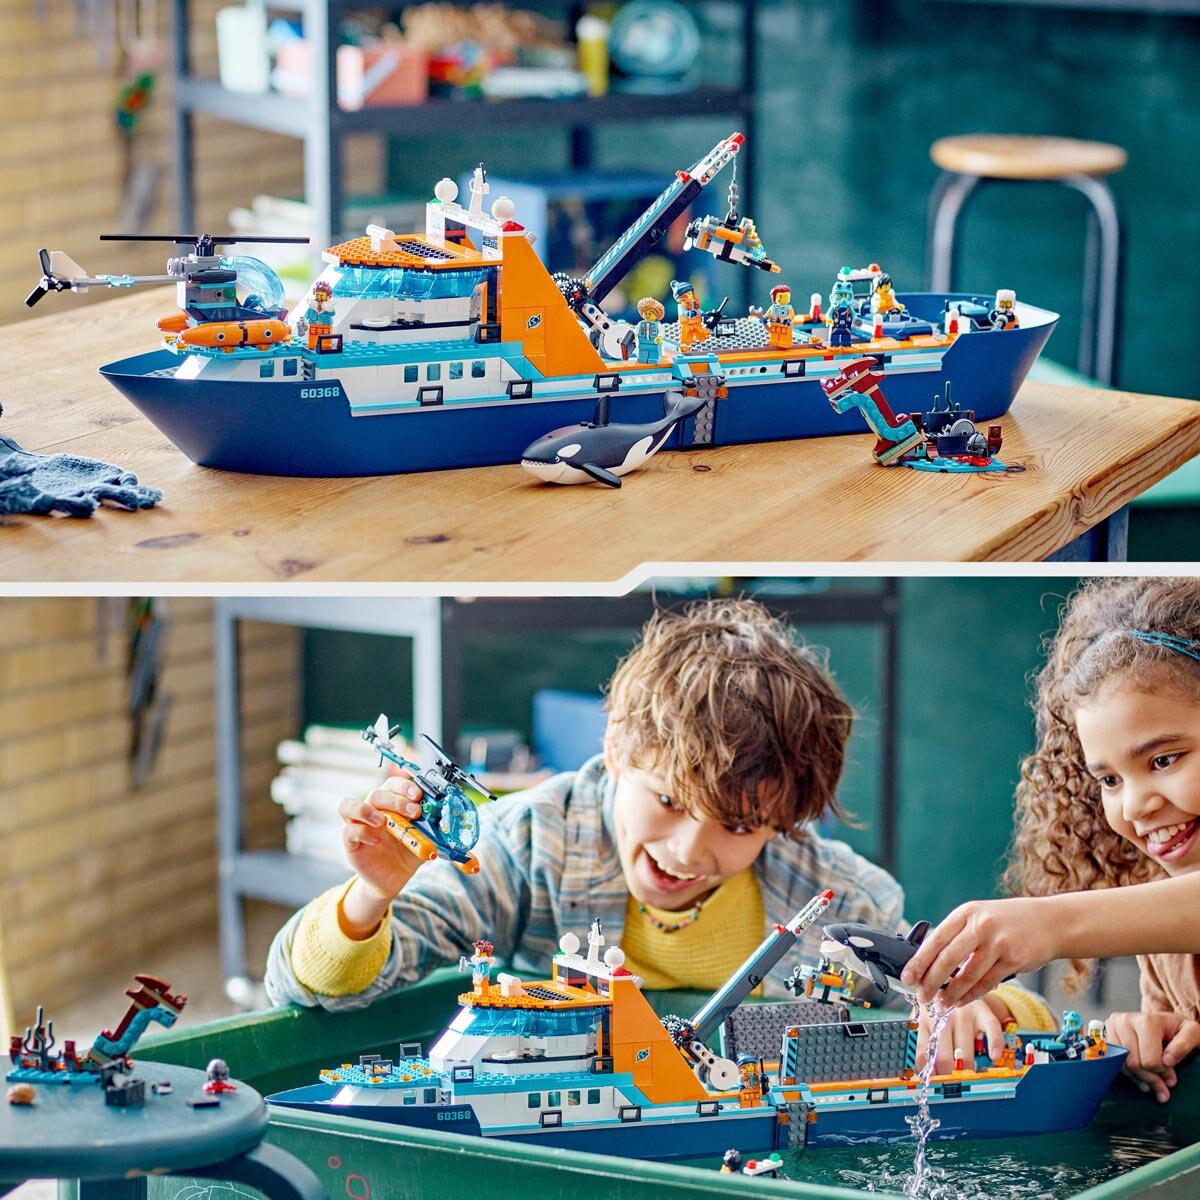 Buy LEGO City Artic Explorer Ship Lifestyle Image at Costco.co.uk